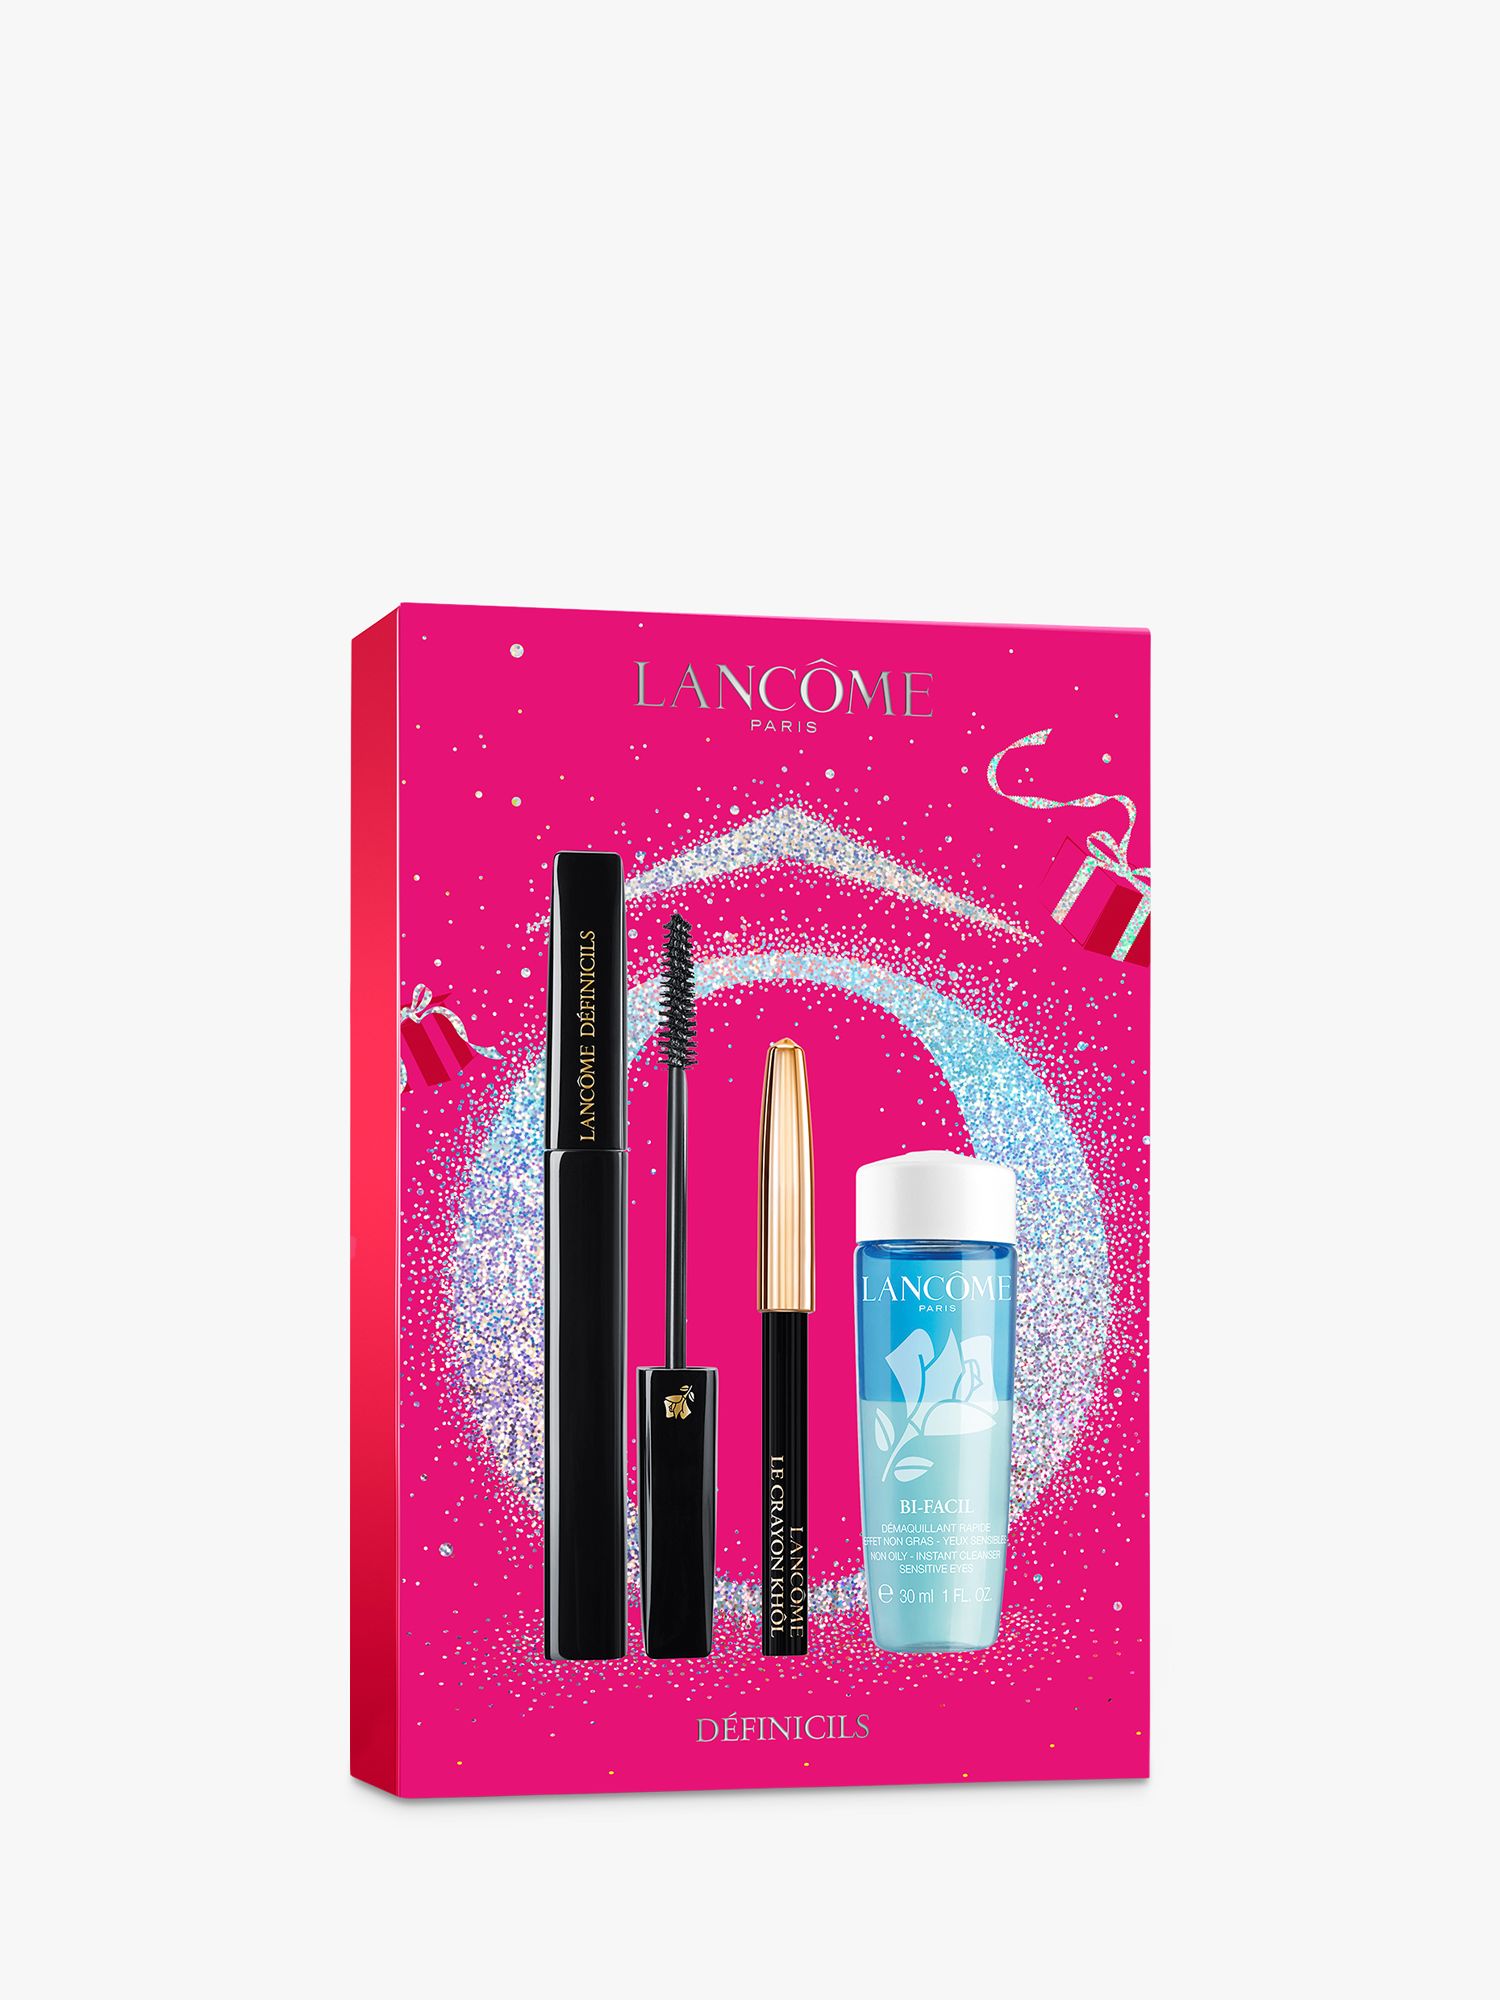 Lancôme Definicils Mascara Christmas Makeup Gift Set at John Lewis